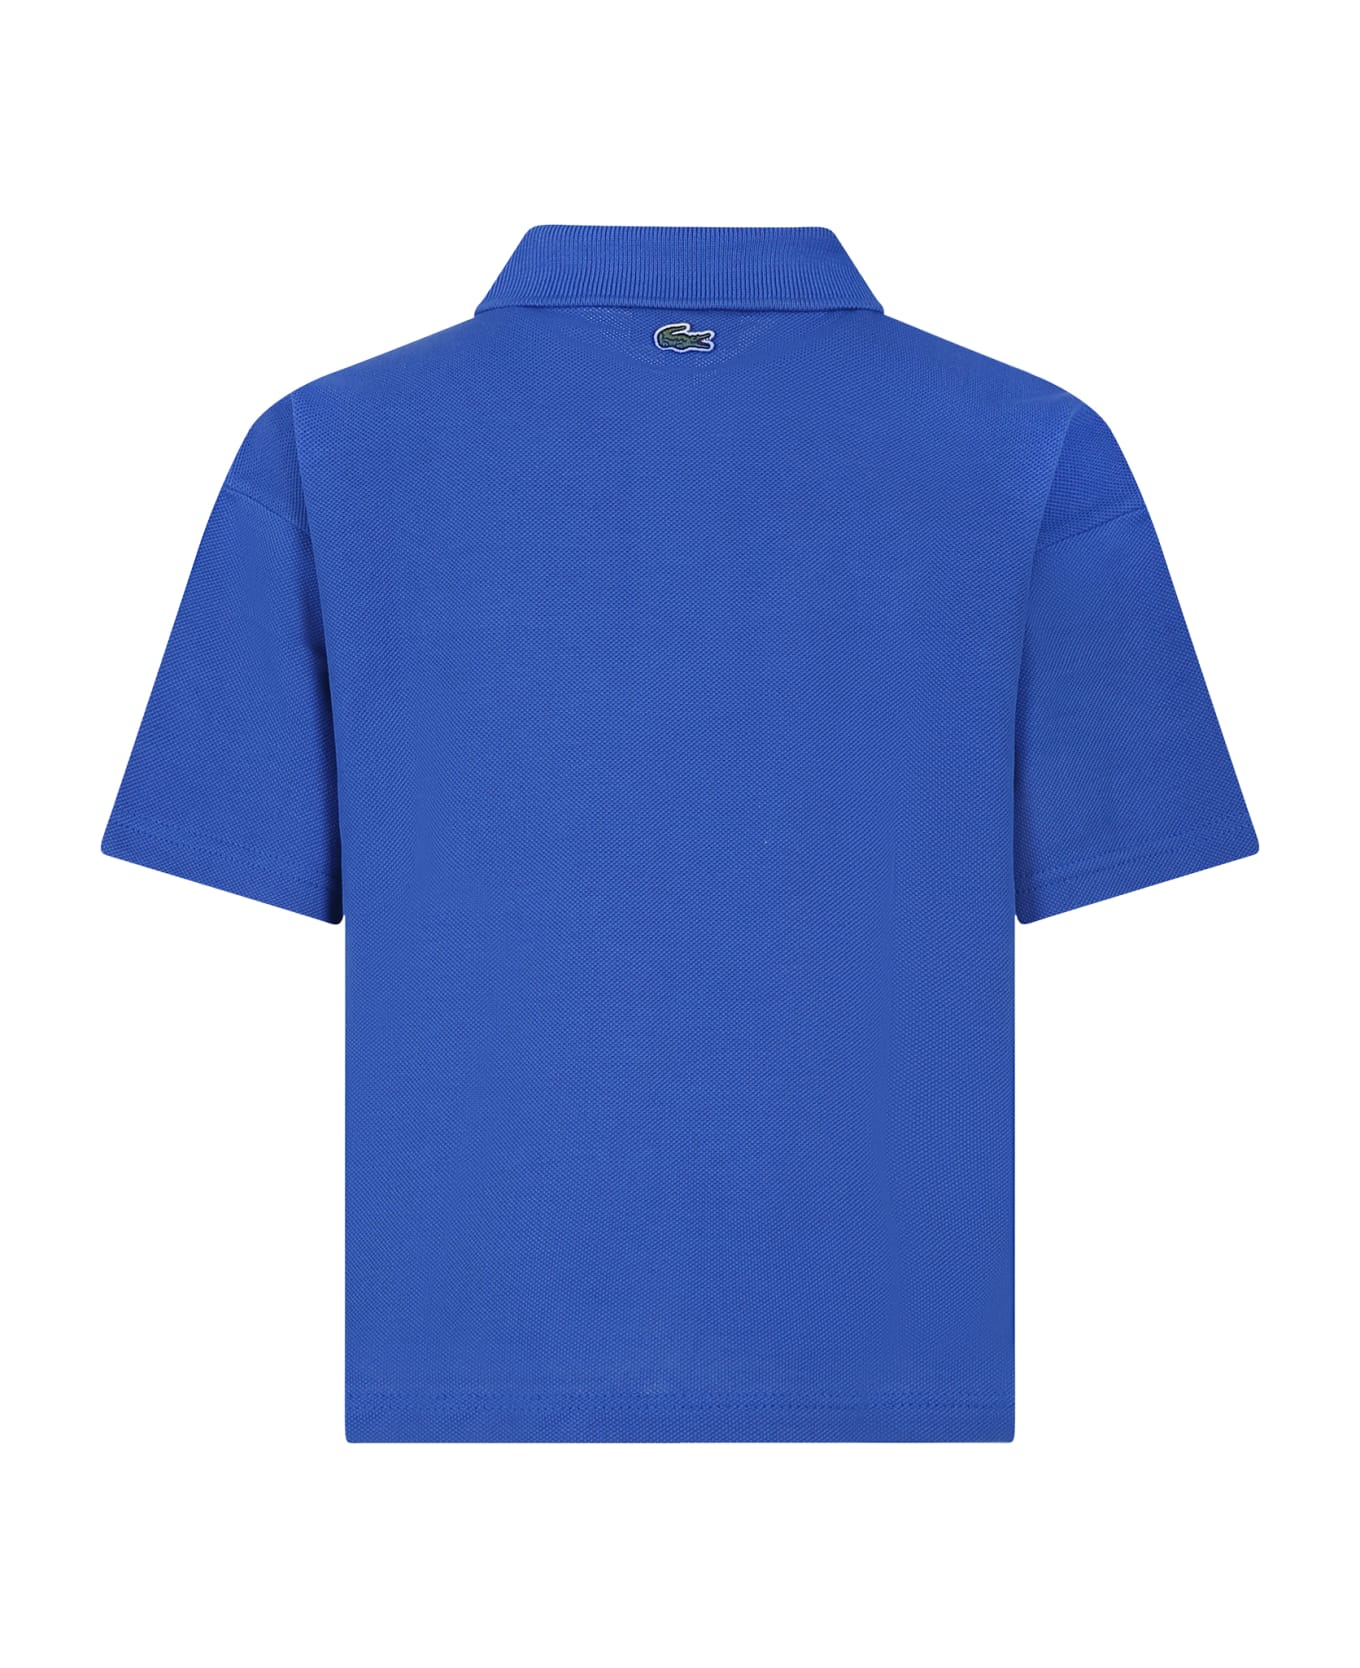 Lacoste Light Blue Polo Shirt For Boy With Crocodile - Light Blue